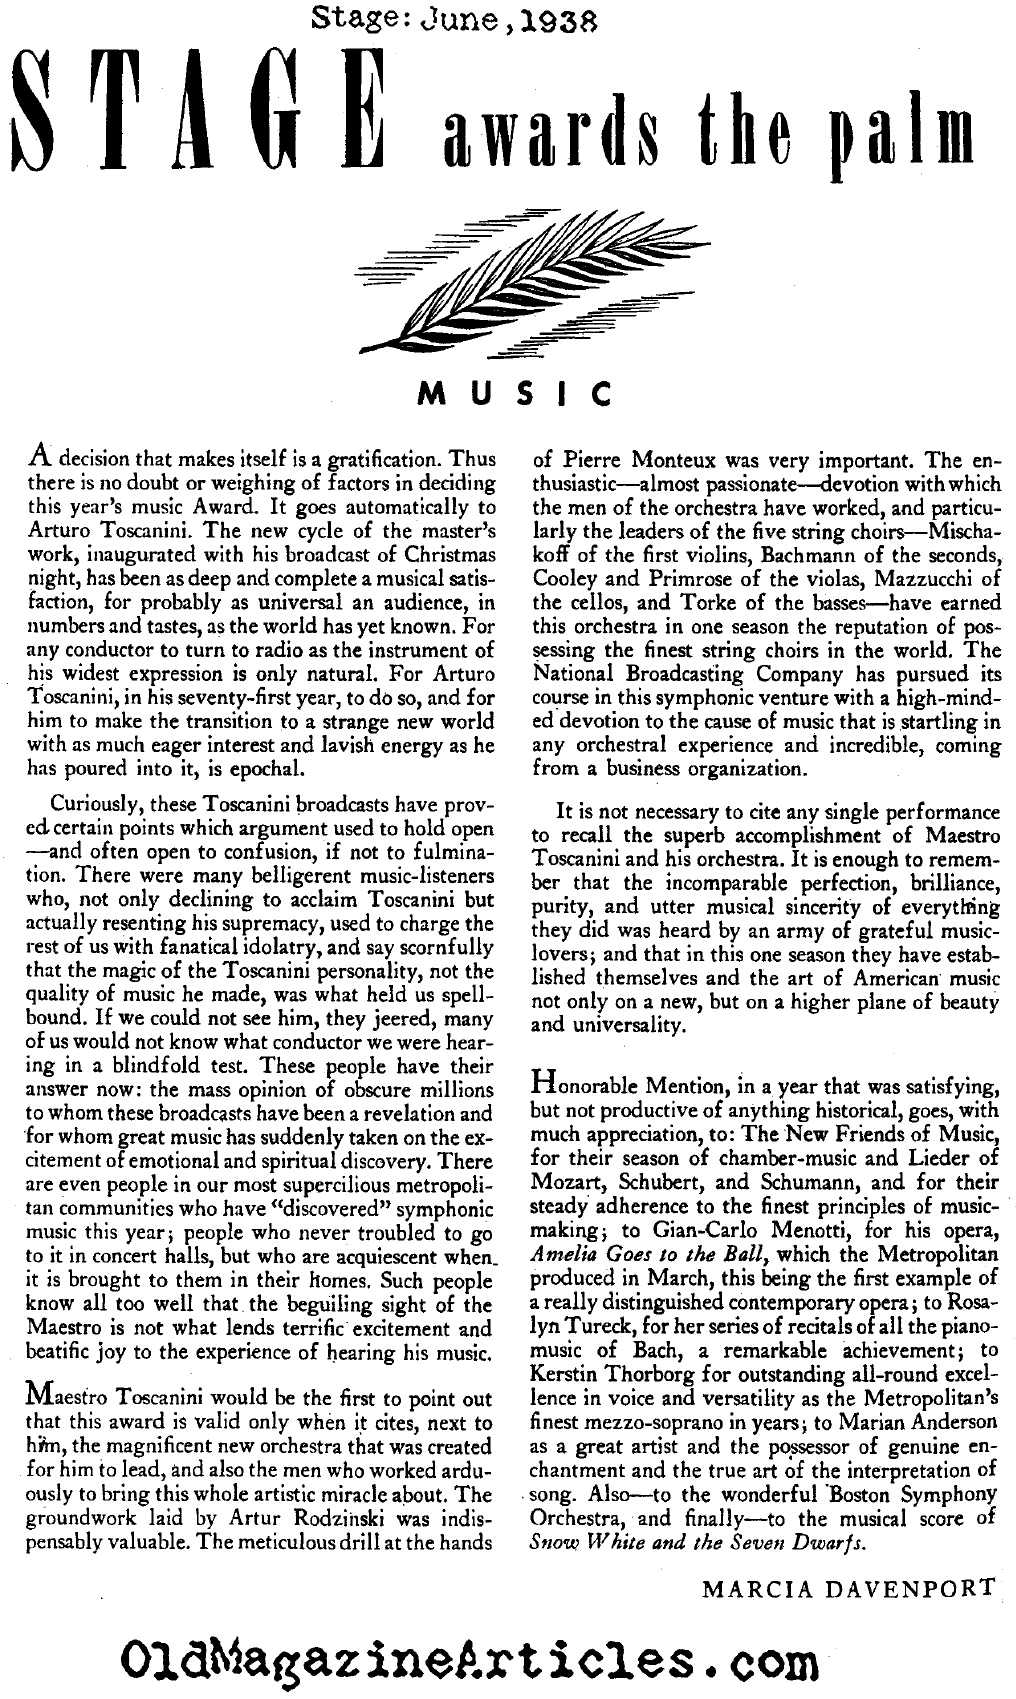 Sweet Words for Maestro Toscanini (Stage Magazine, 1938)